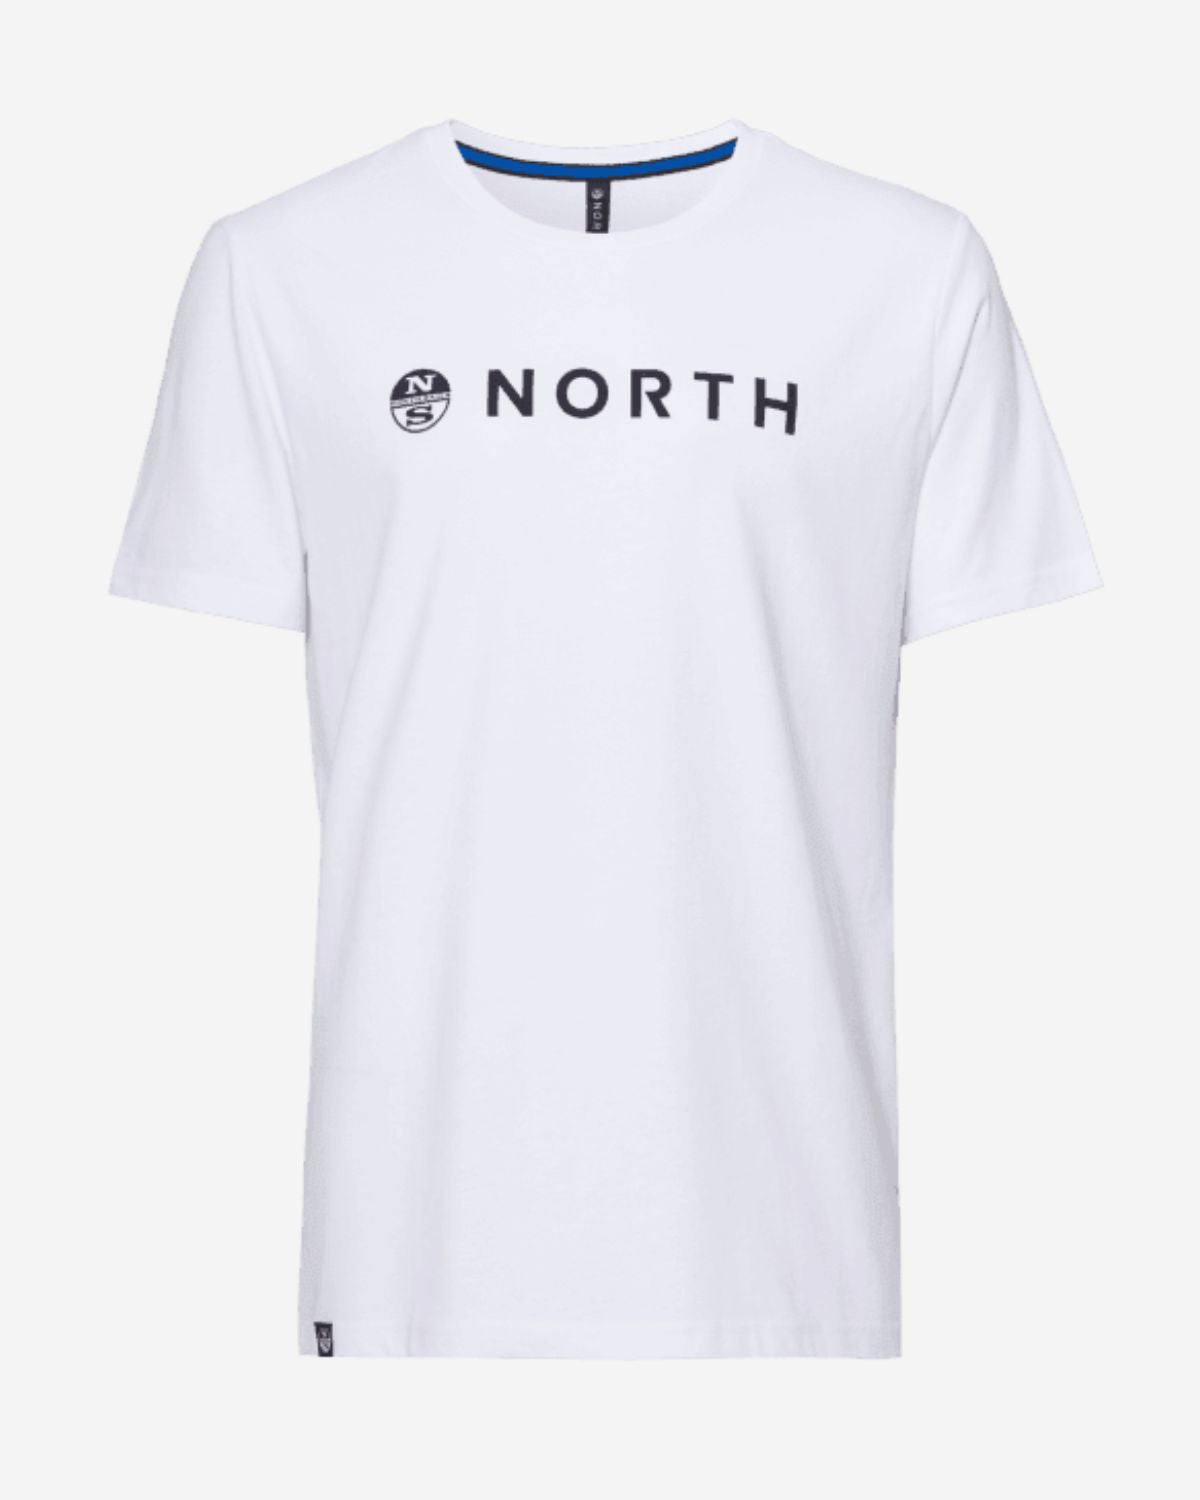 Camiseta North Brand